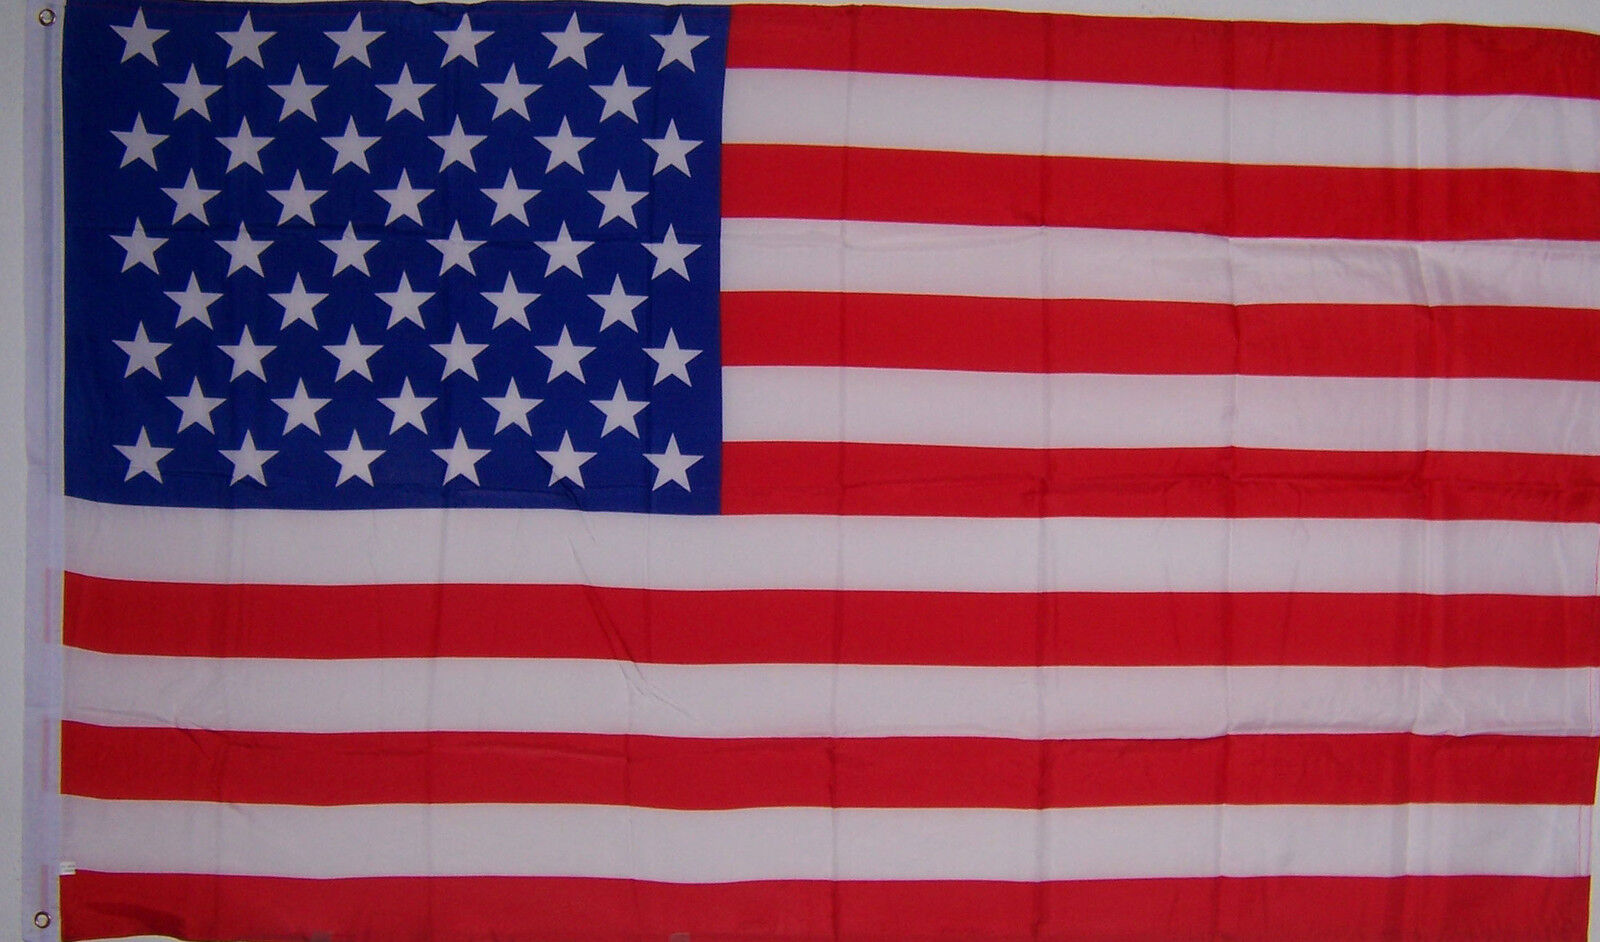 NEW BIG 2ftx3 UNITED STATES U.S. AMERICAN FLAG better quality usa seller